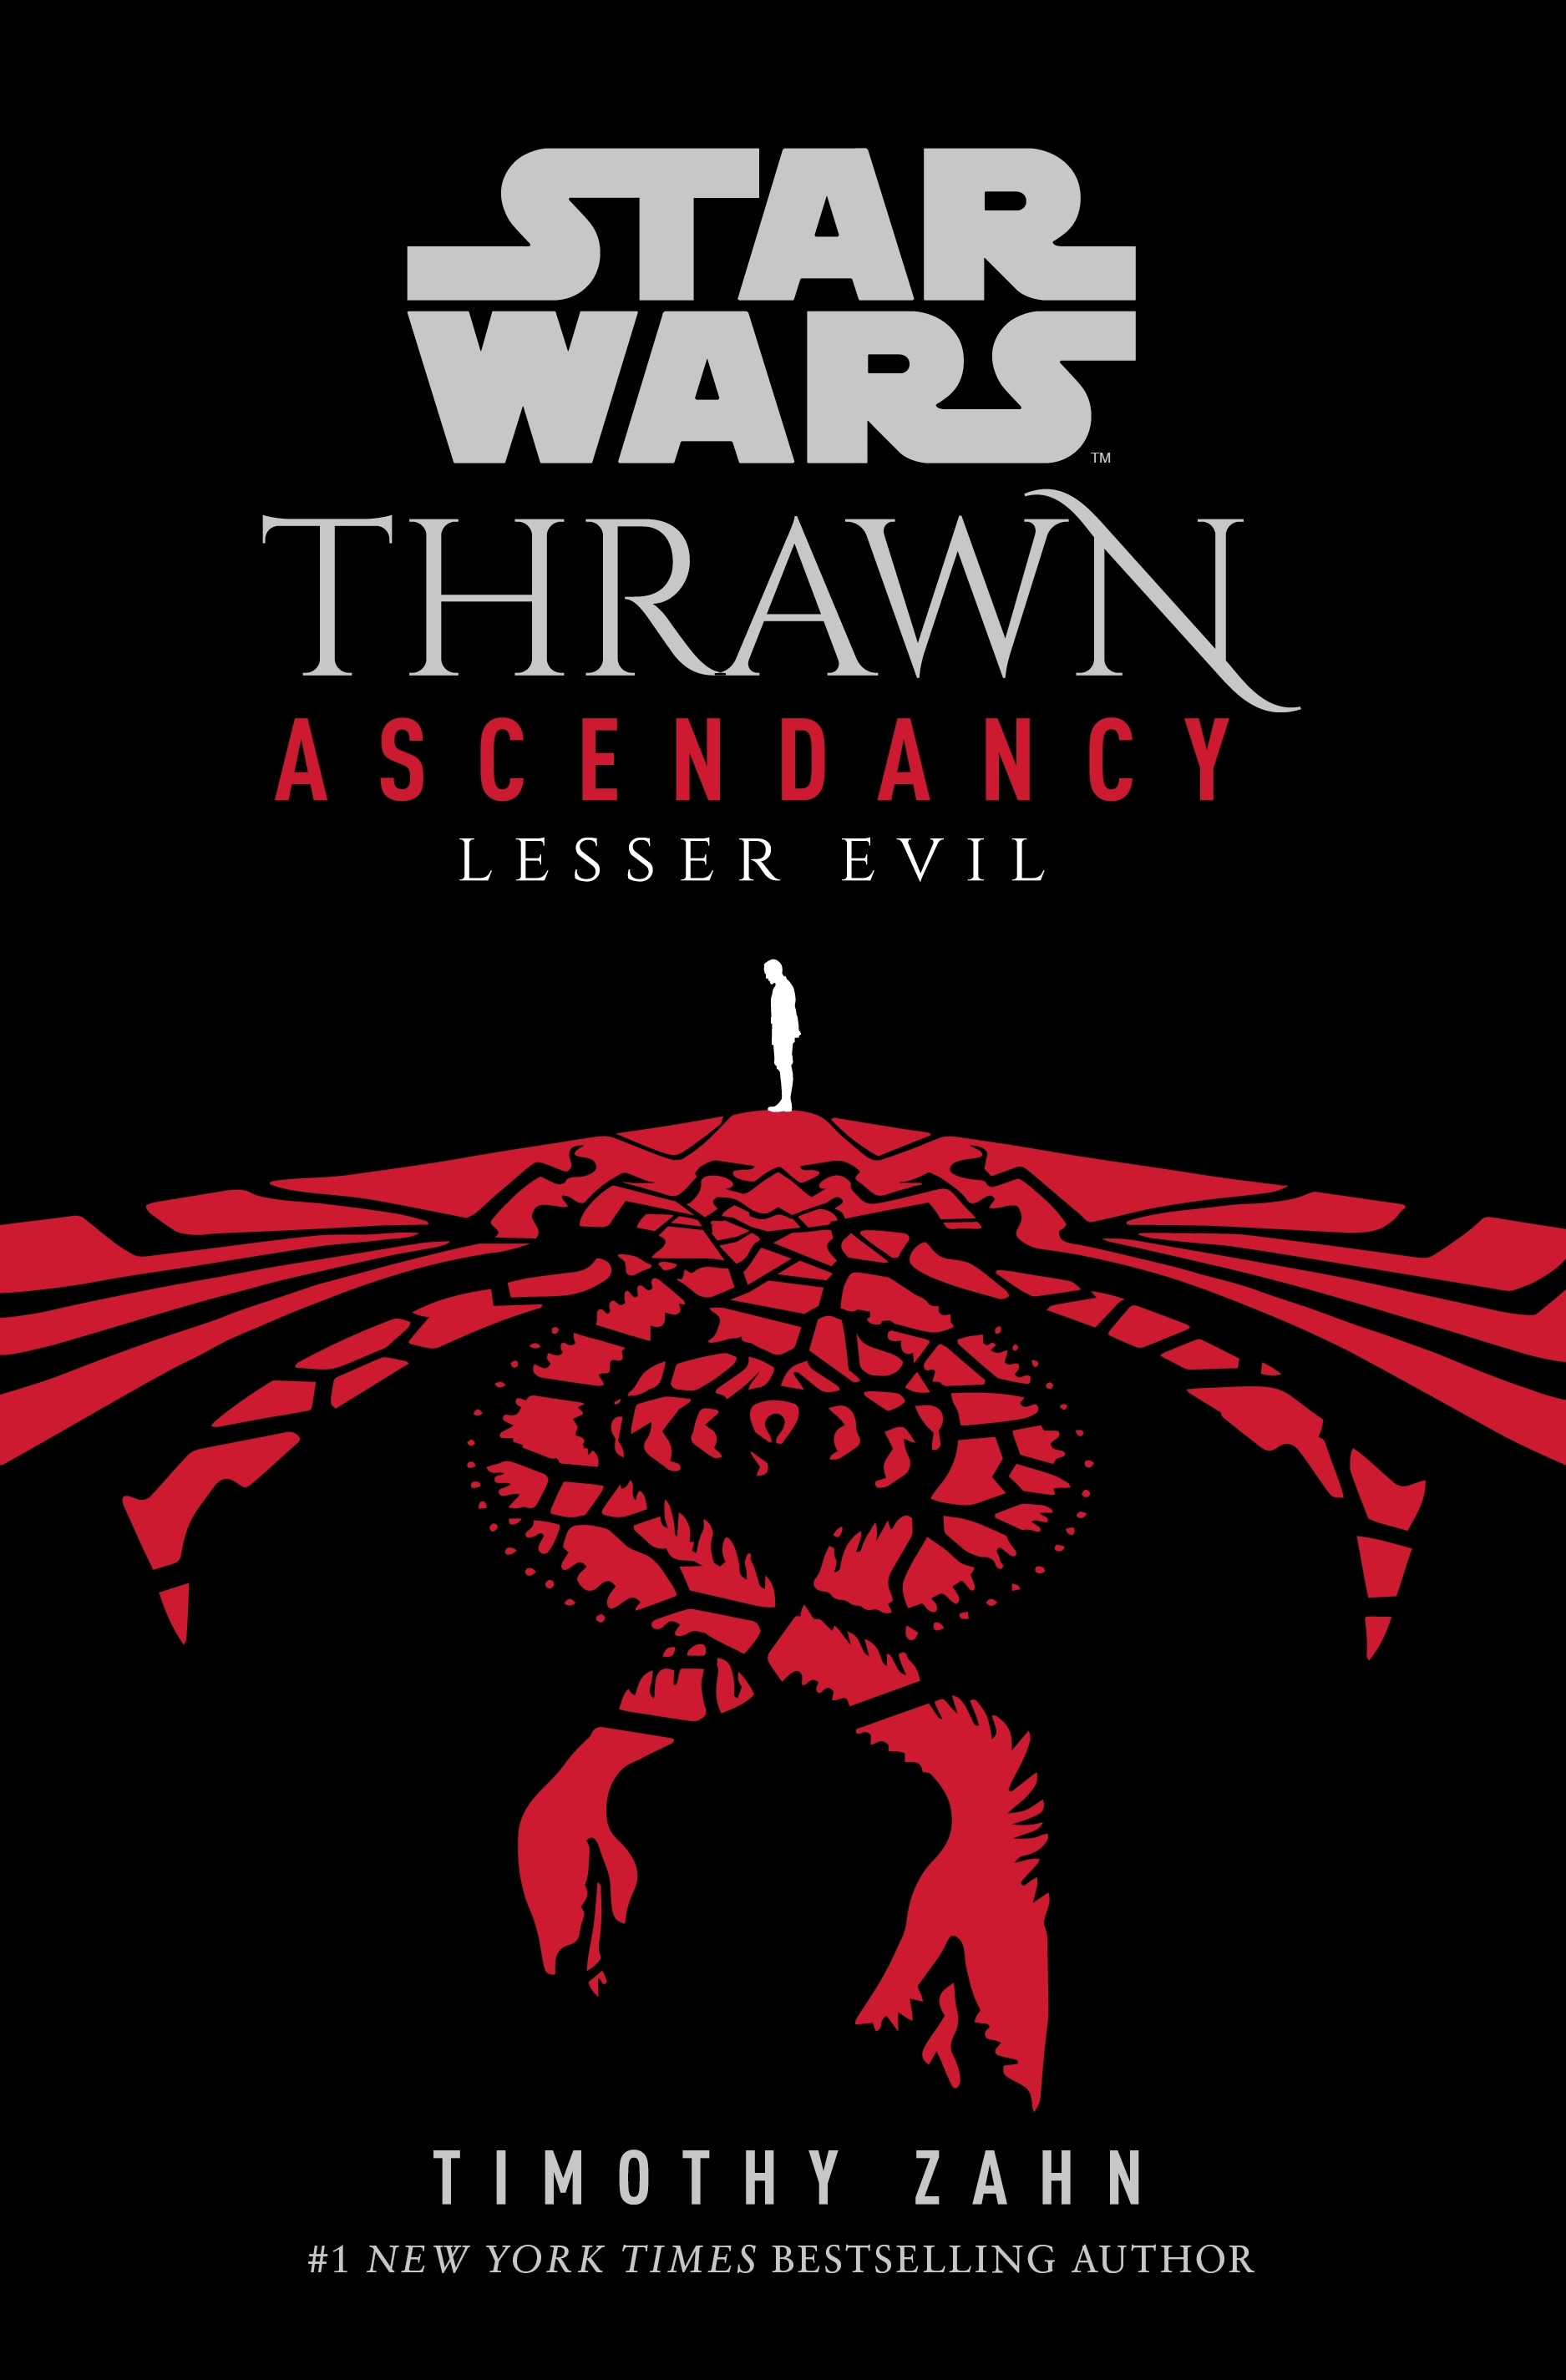 Book “Star Wars: Thrawn Ascendancy: (Book 3: Lesser Evil)” by Timothy Zahn — August 4, 2022